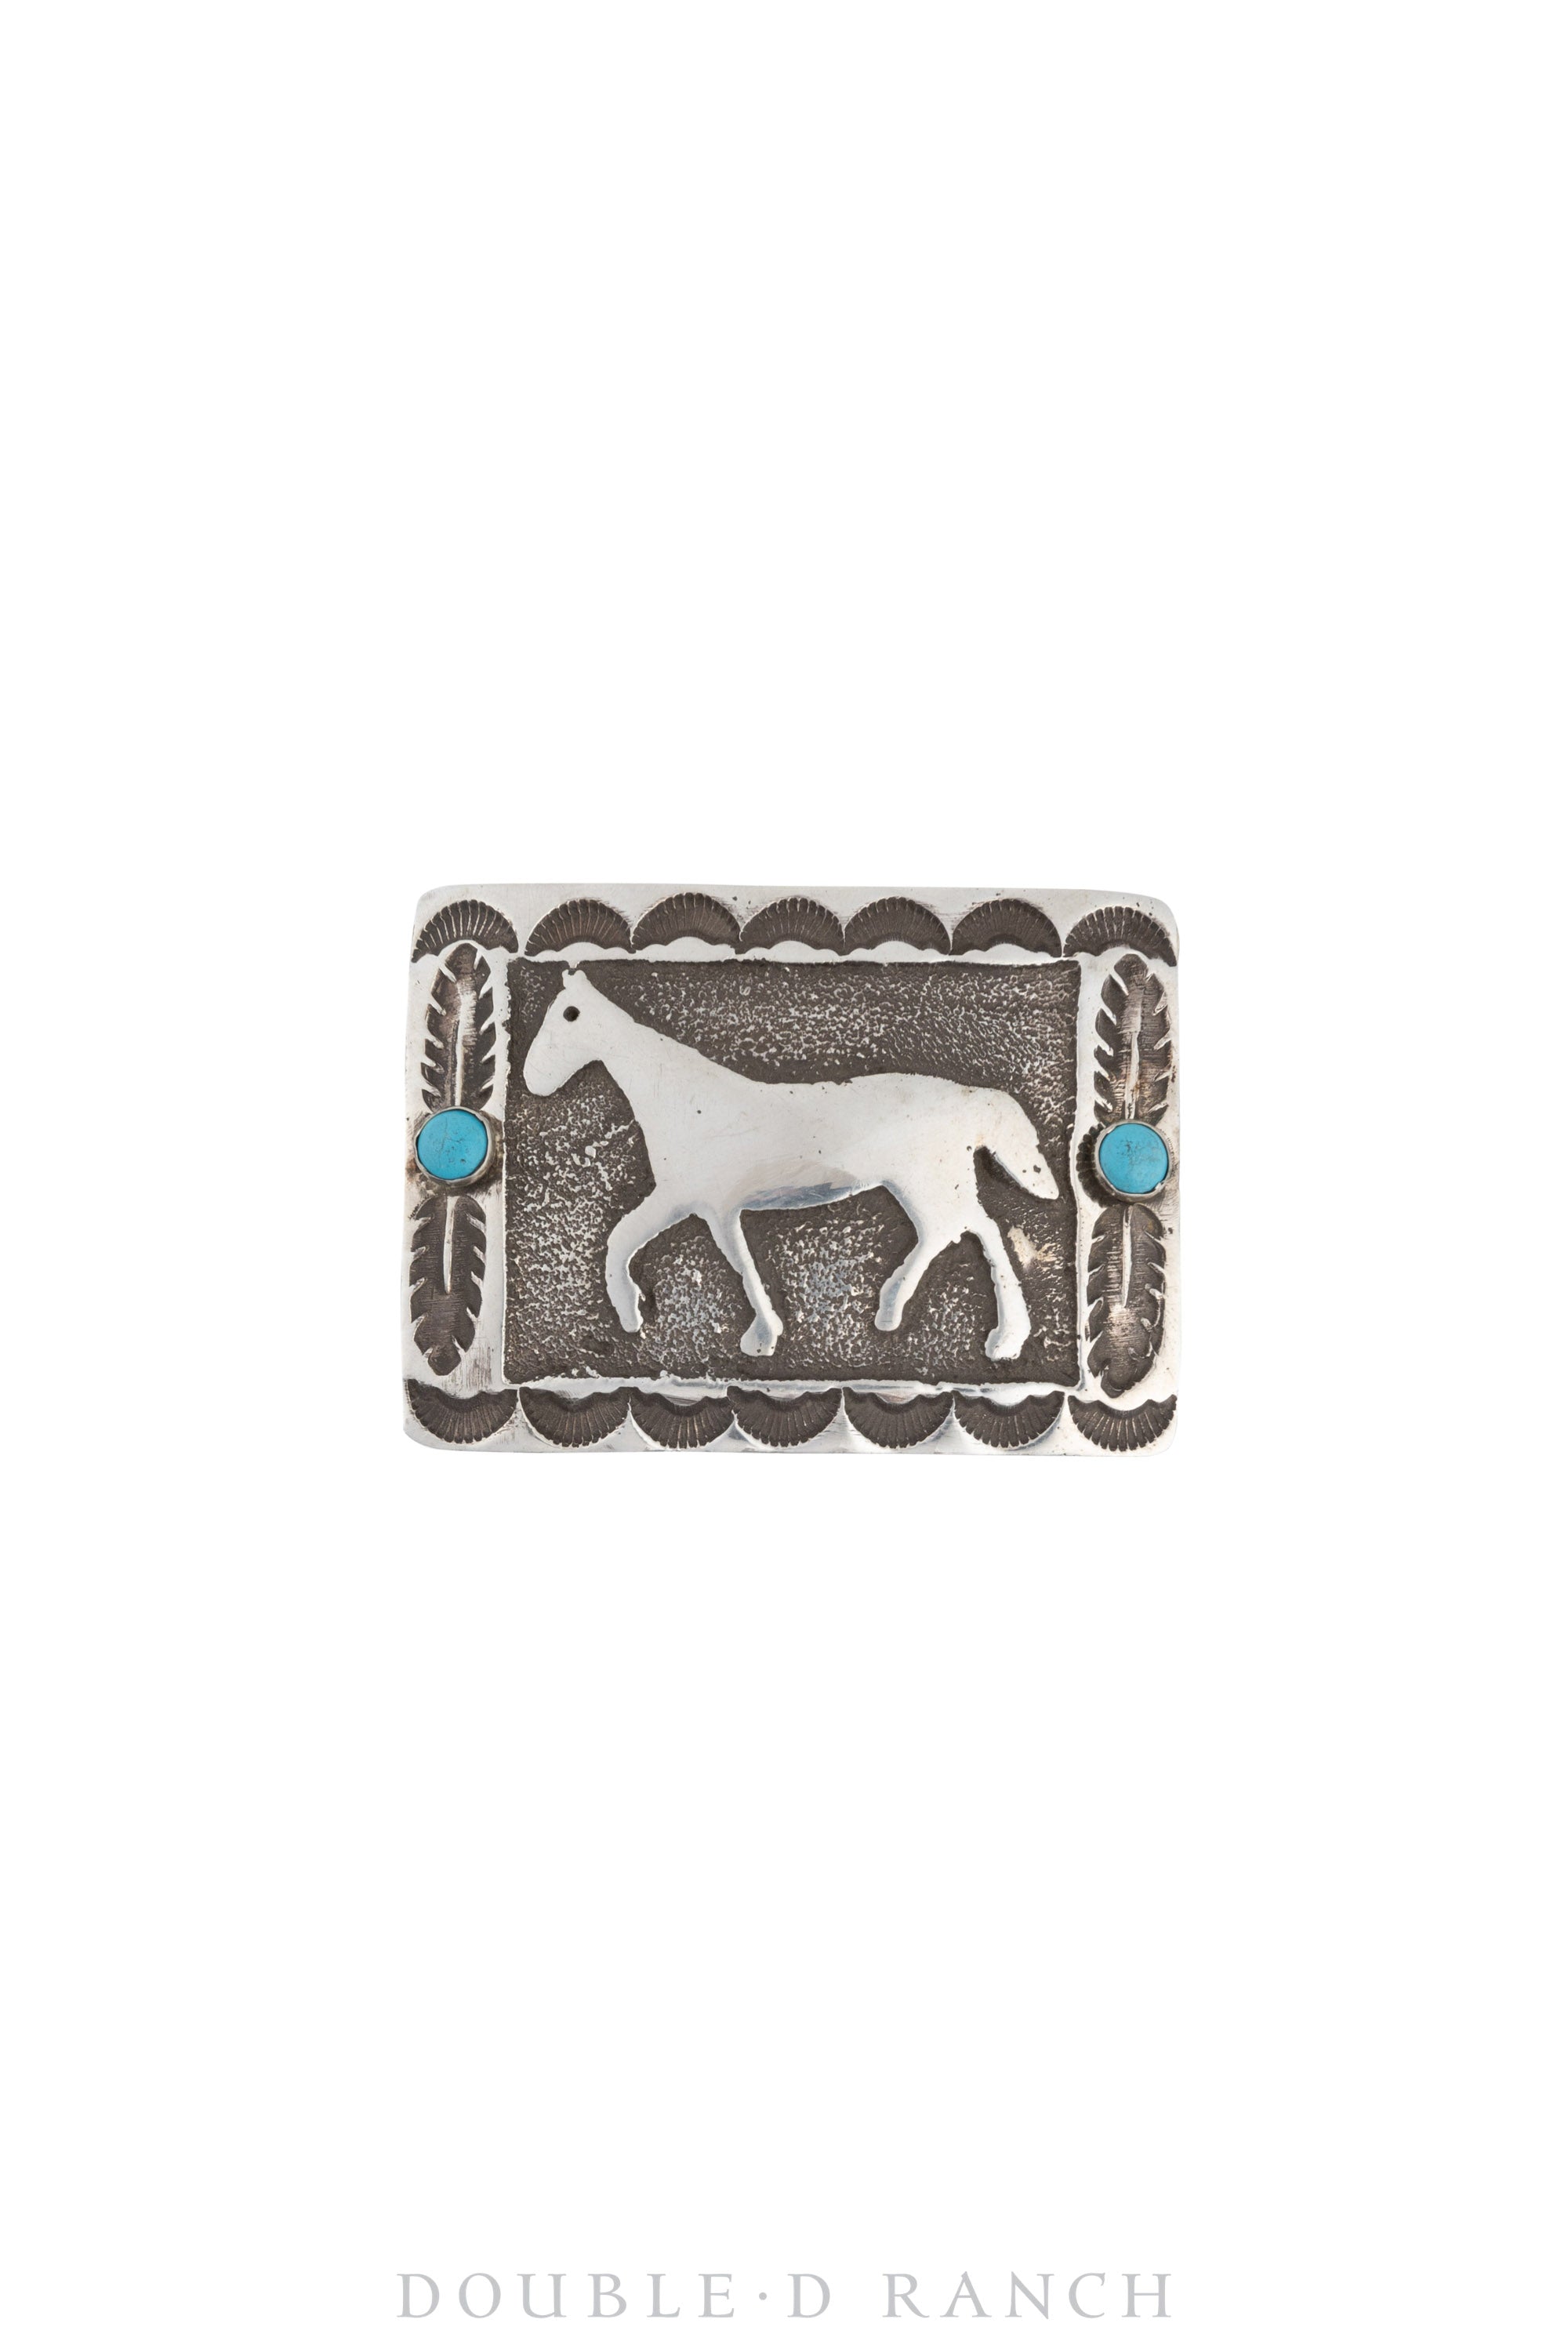 Pin, Cast, Turquoise, Horse, Hallmark, Vintage, 926